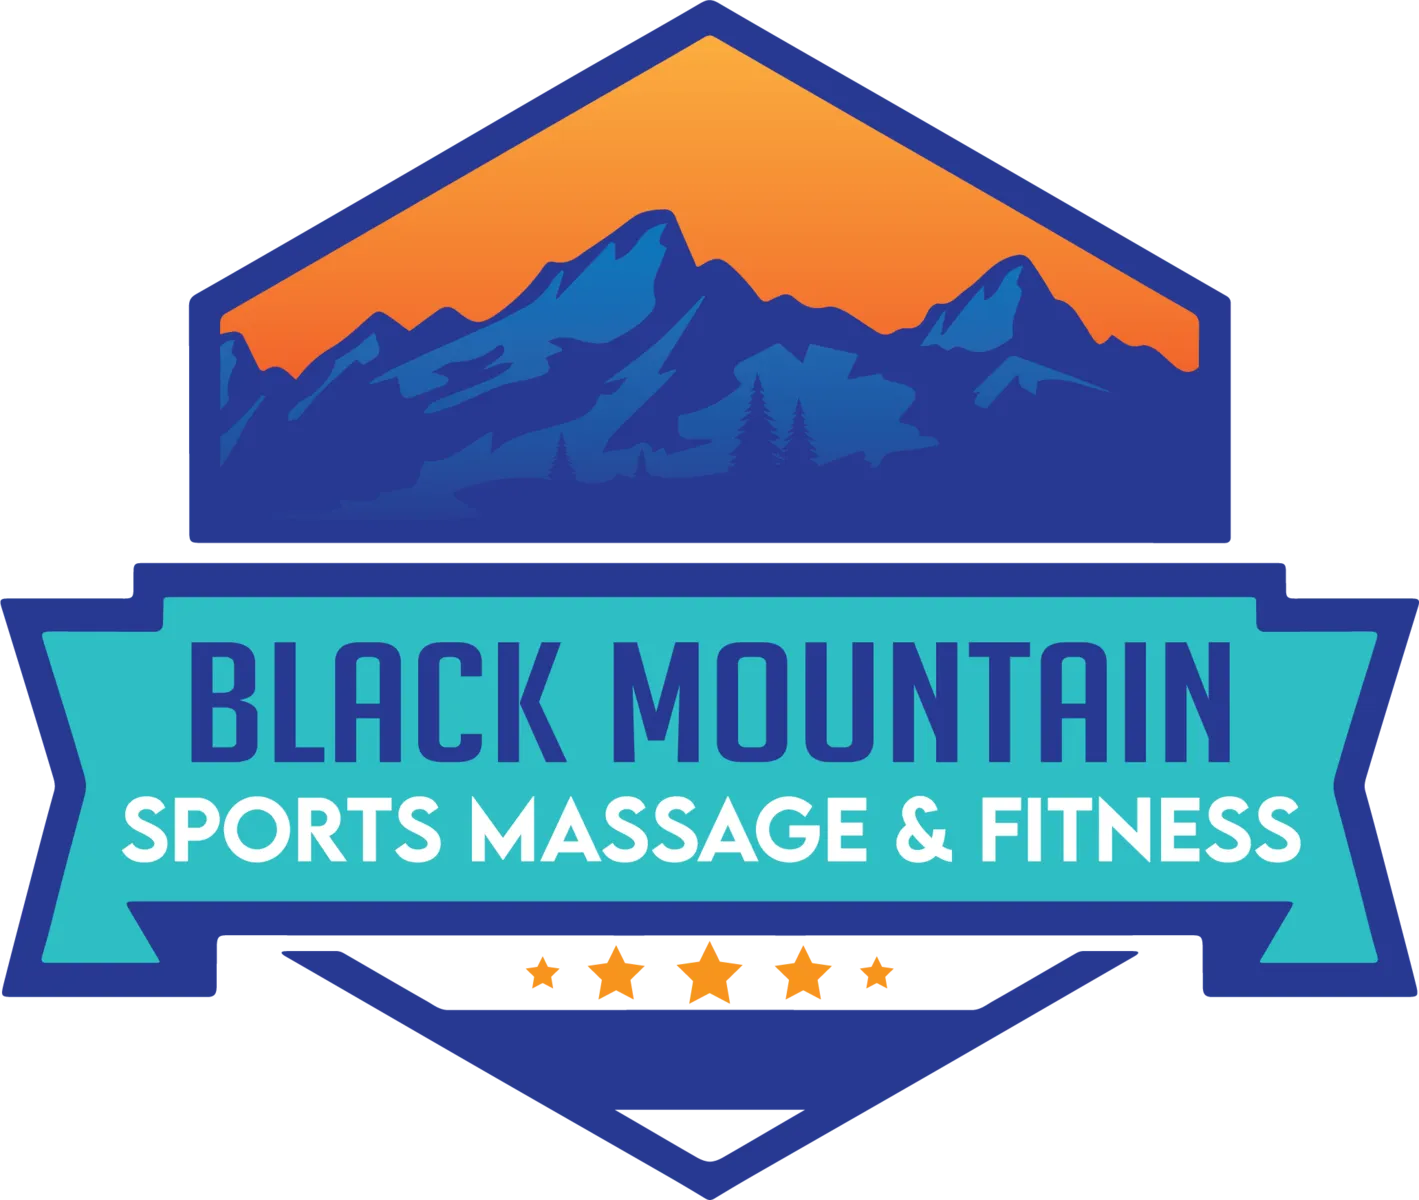 Black Mountain Sports Massage & Fitness